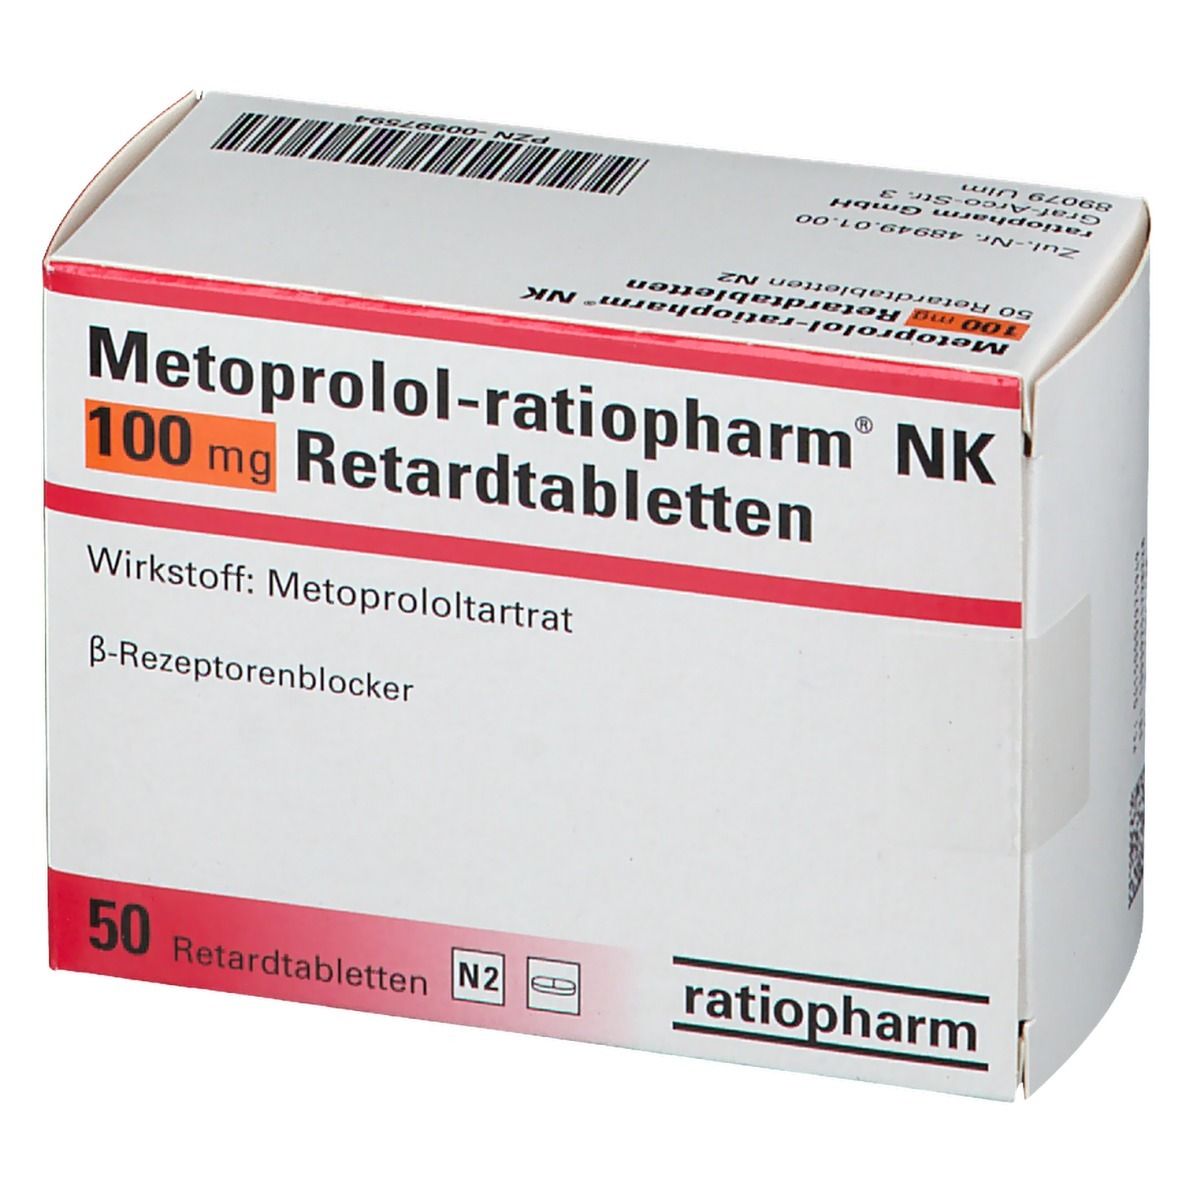 Metoprolol-ratiopharm® NK 100 mg